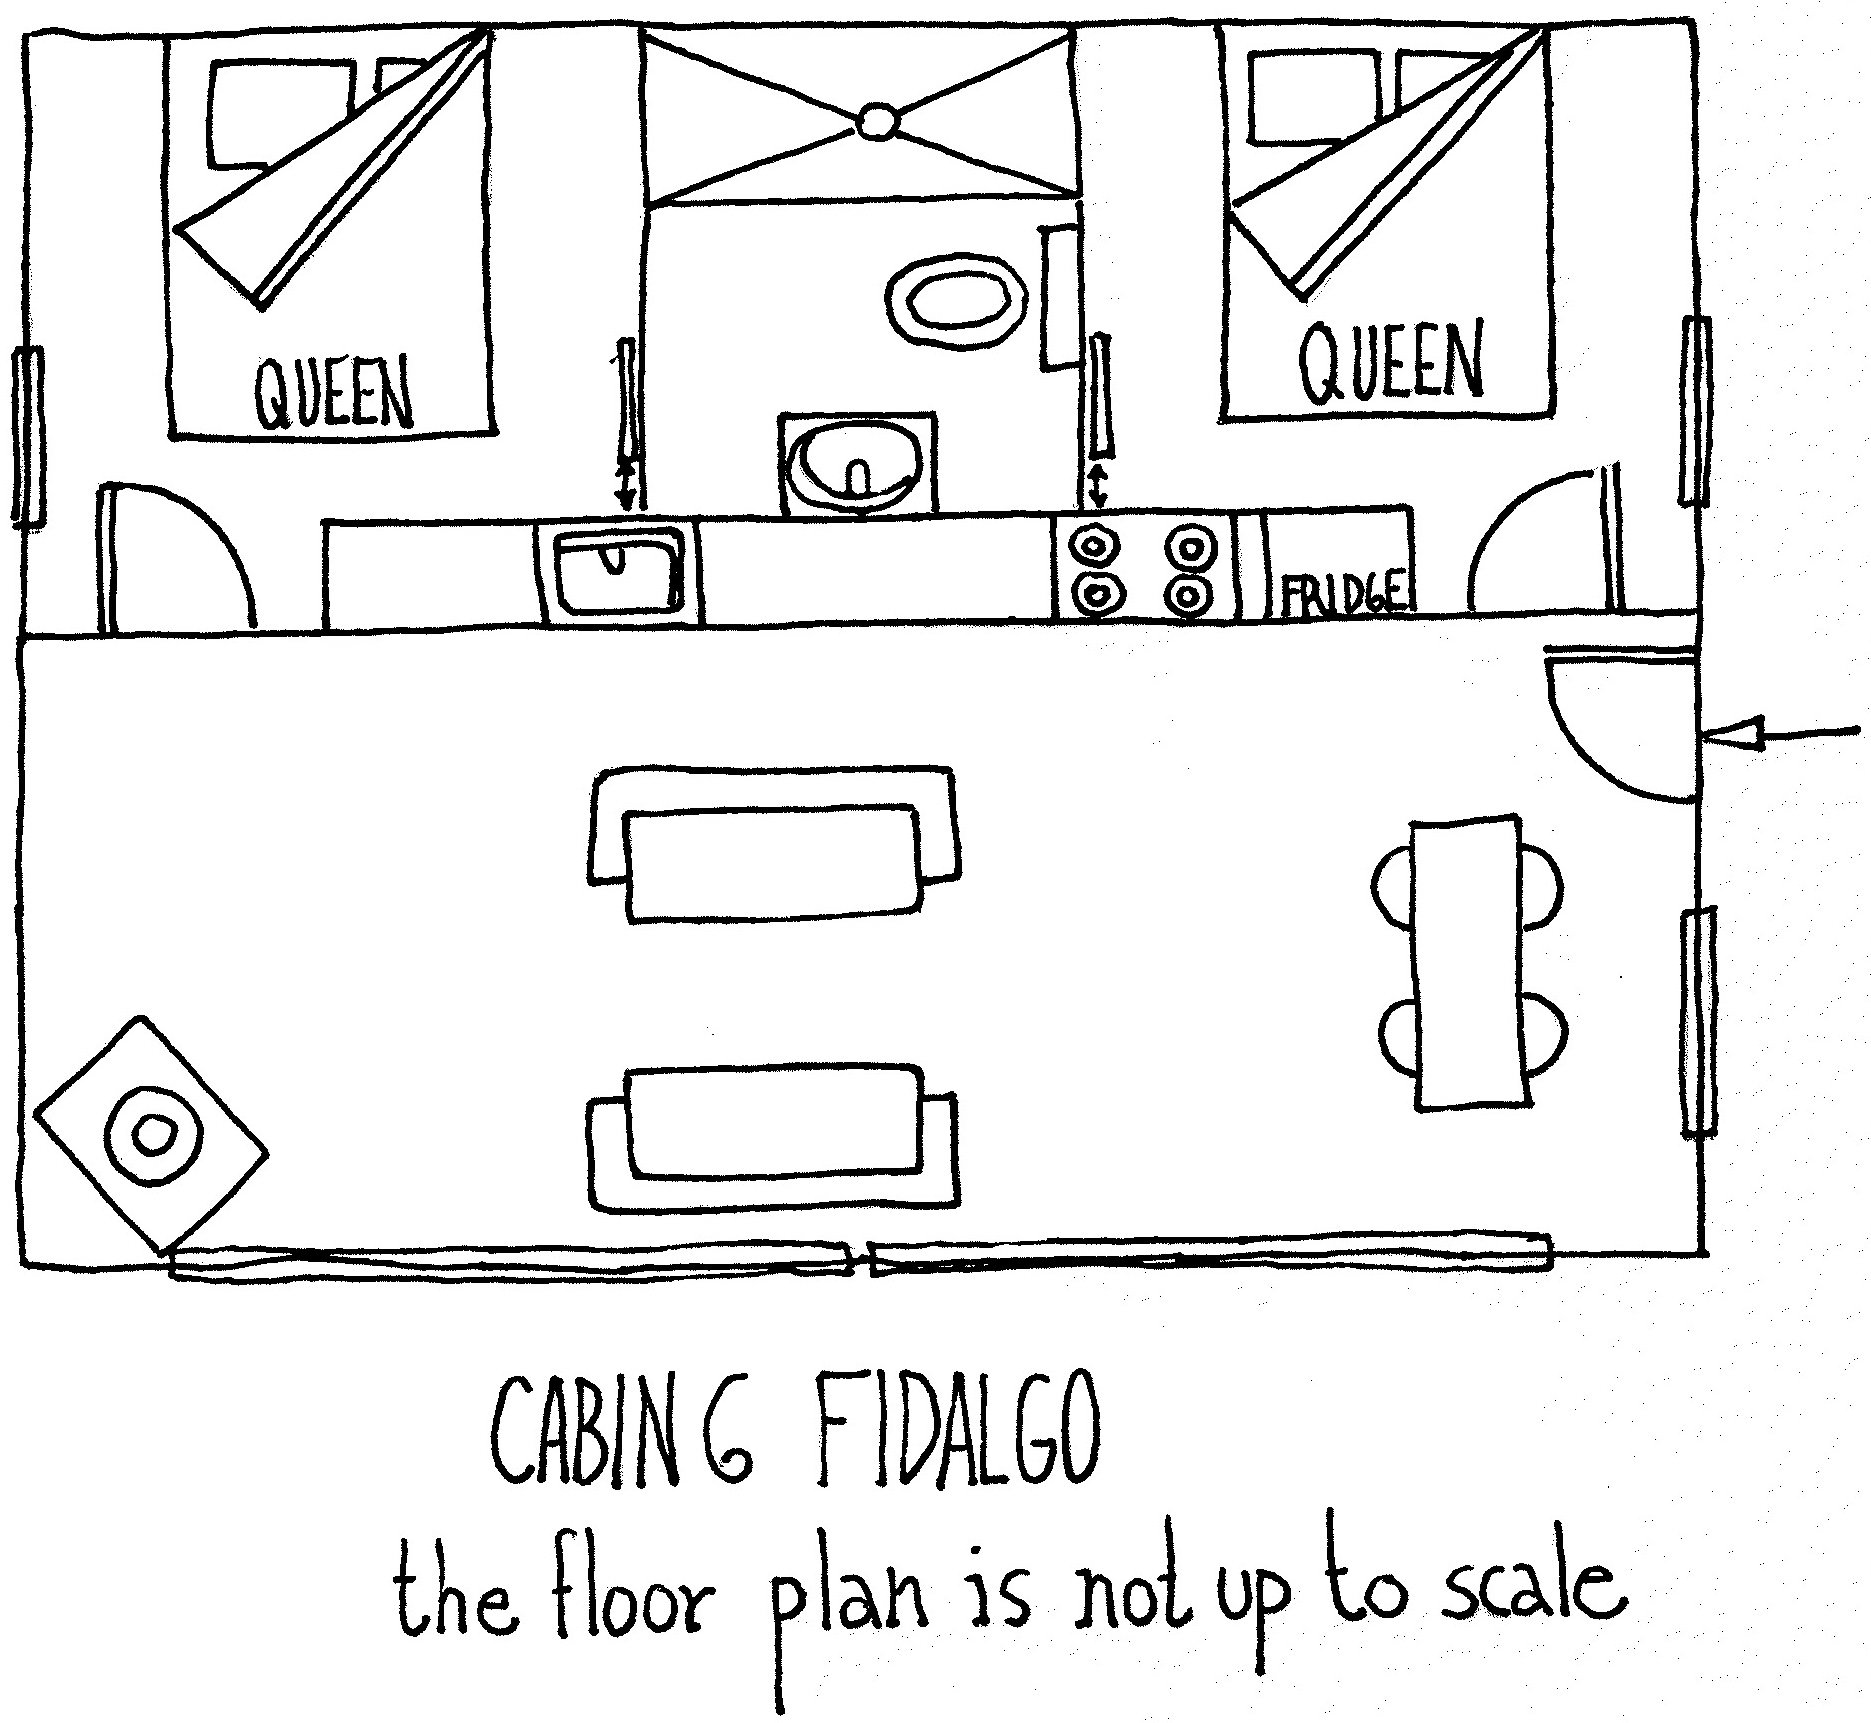 GIR Fidalgo Floorplan.jpg